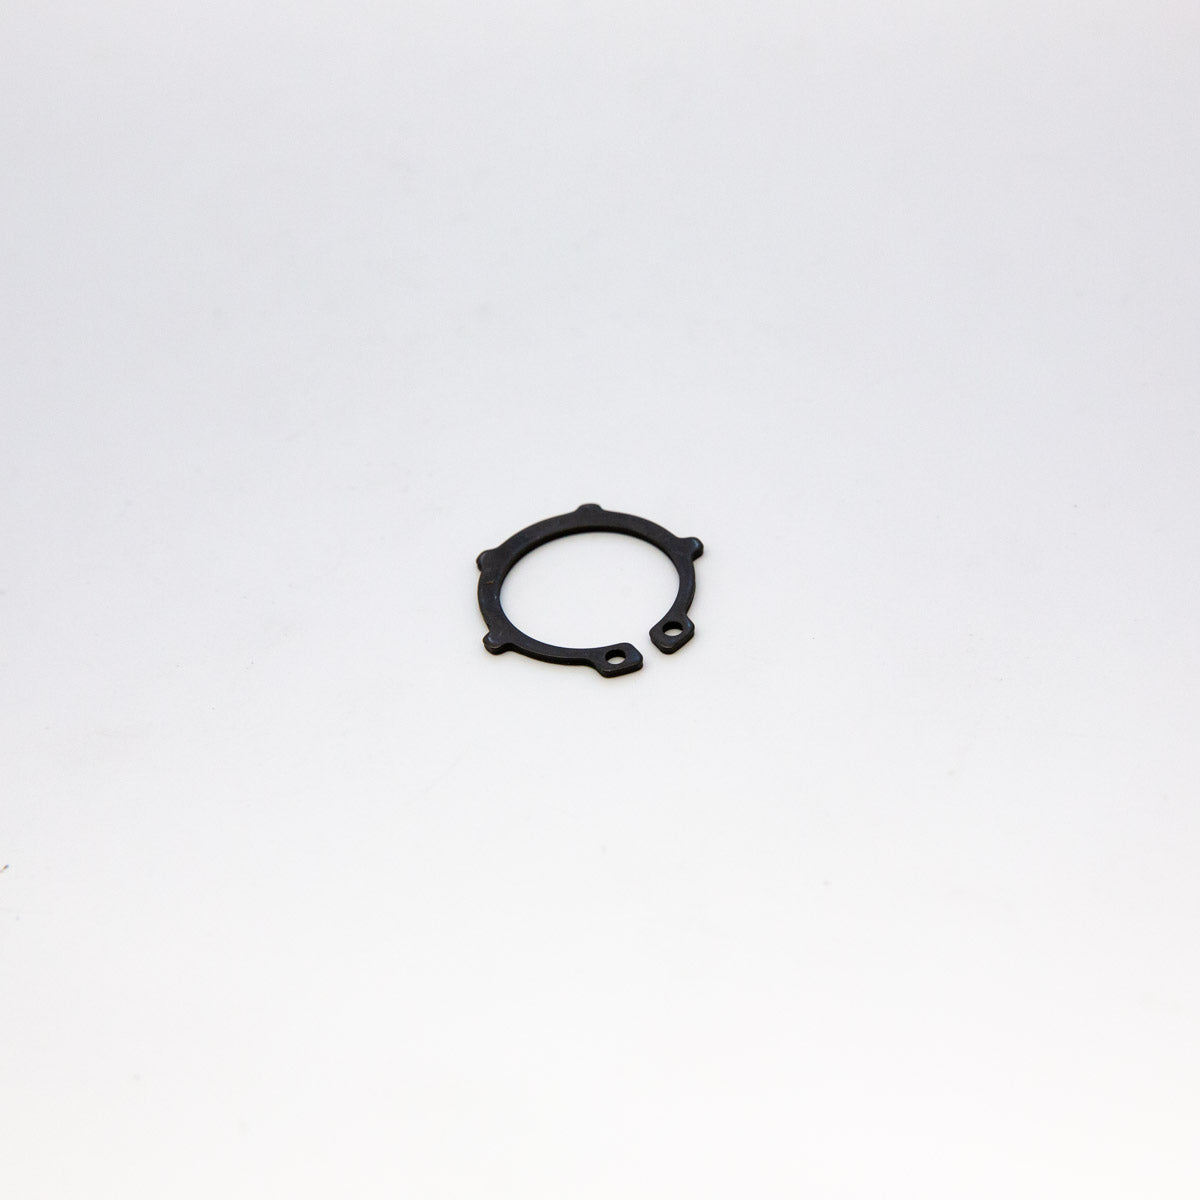 Retaining Ring W/Lug DIN 983-20x1.2